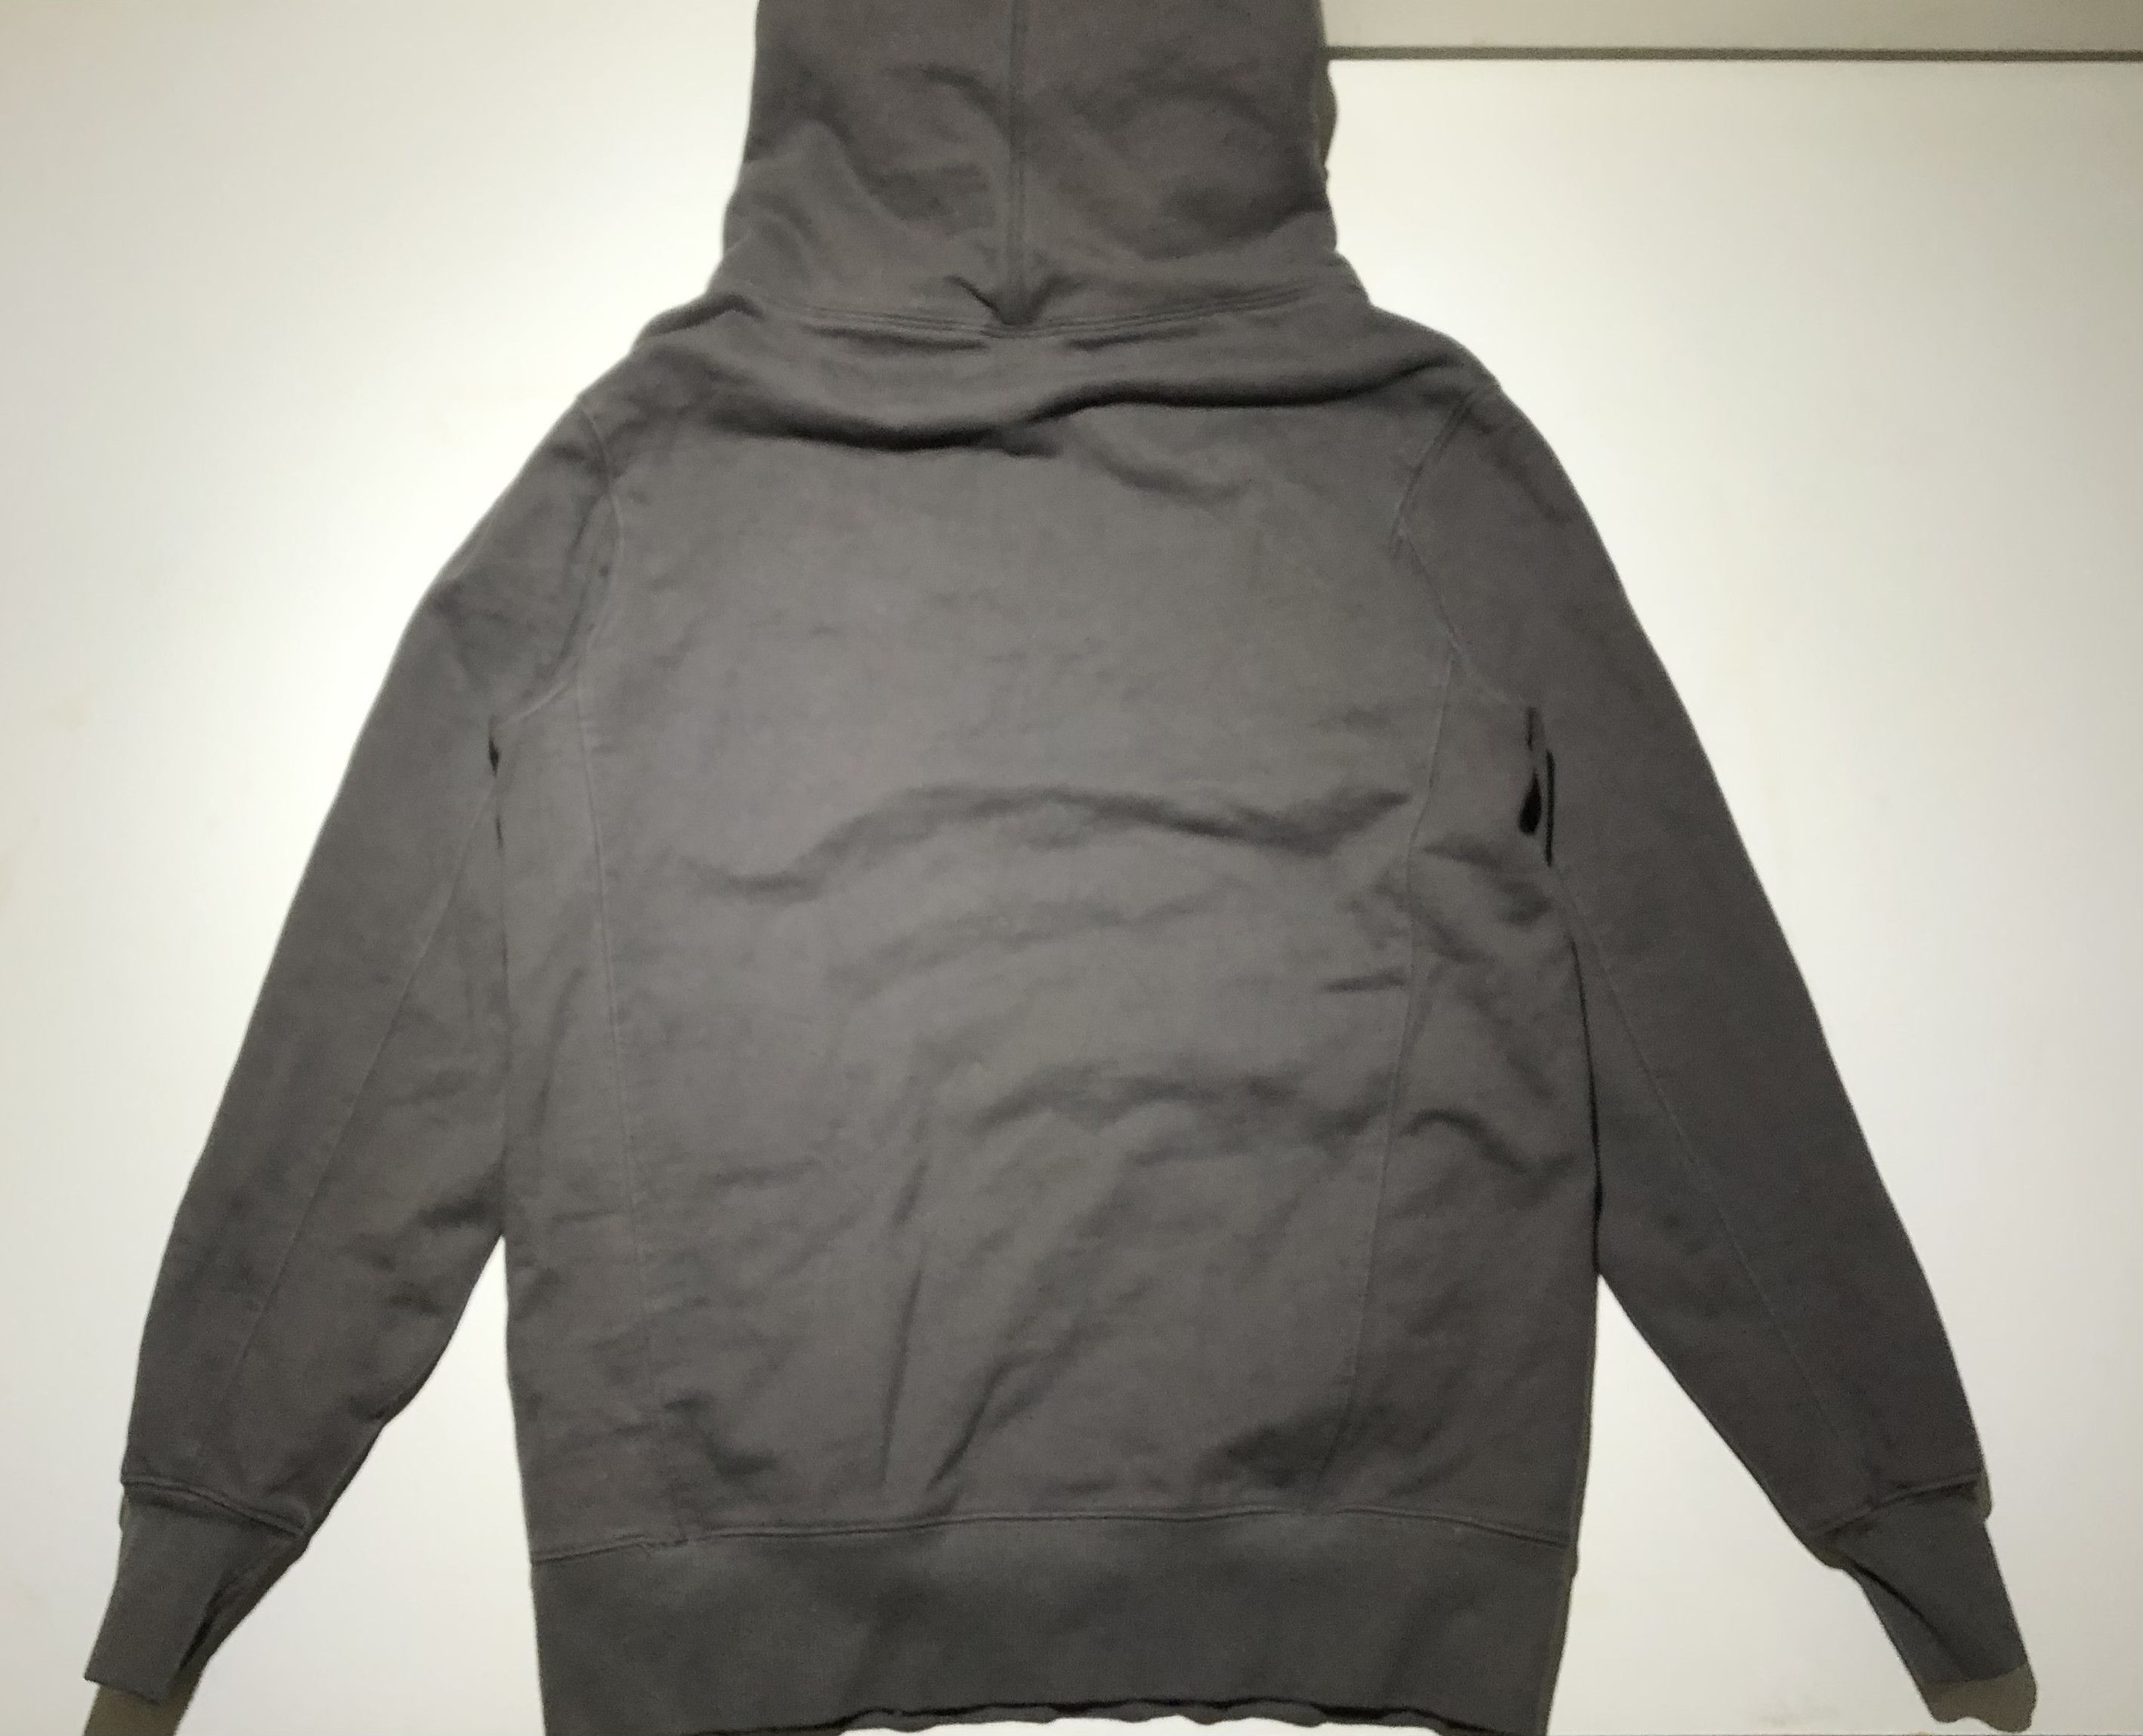 Japanese Brand Esntls Thick Grey Street Wear Essential Hoodie Size US S / EU 44-46 / 1 - 8 Preview